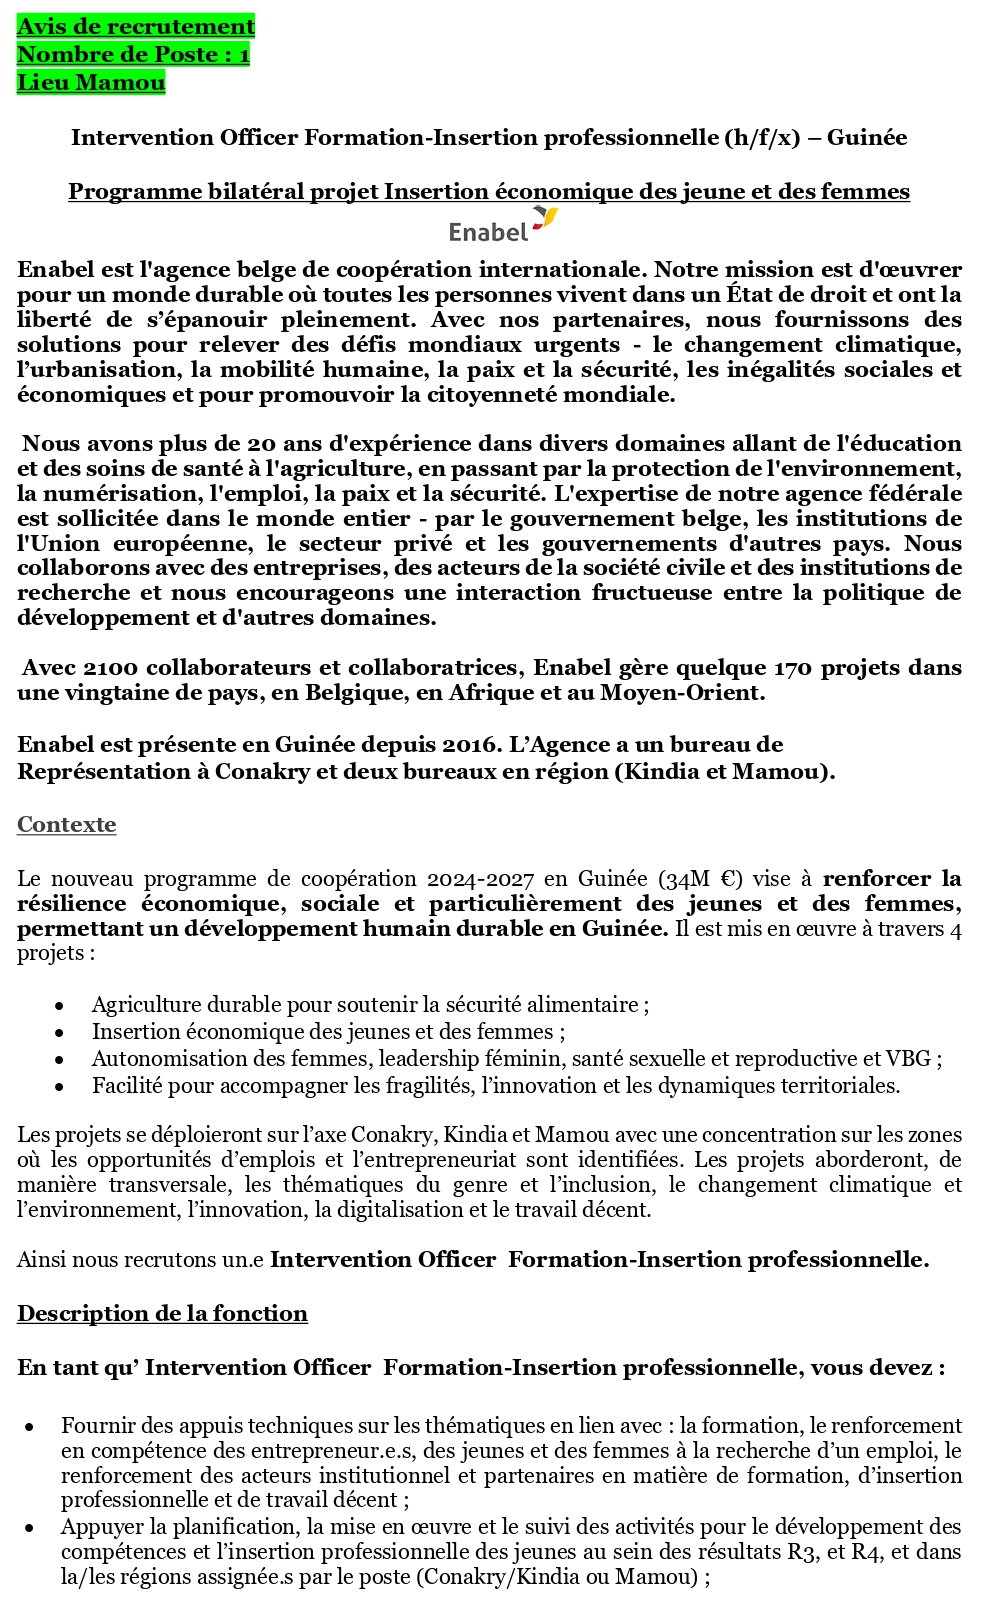 Recrutement d'un Intervention Officer Formation-Insertion professionnelle (h/f/x) – Guinée | Page 1